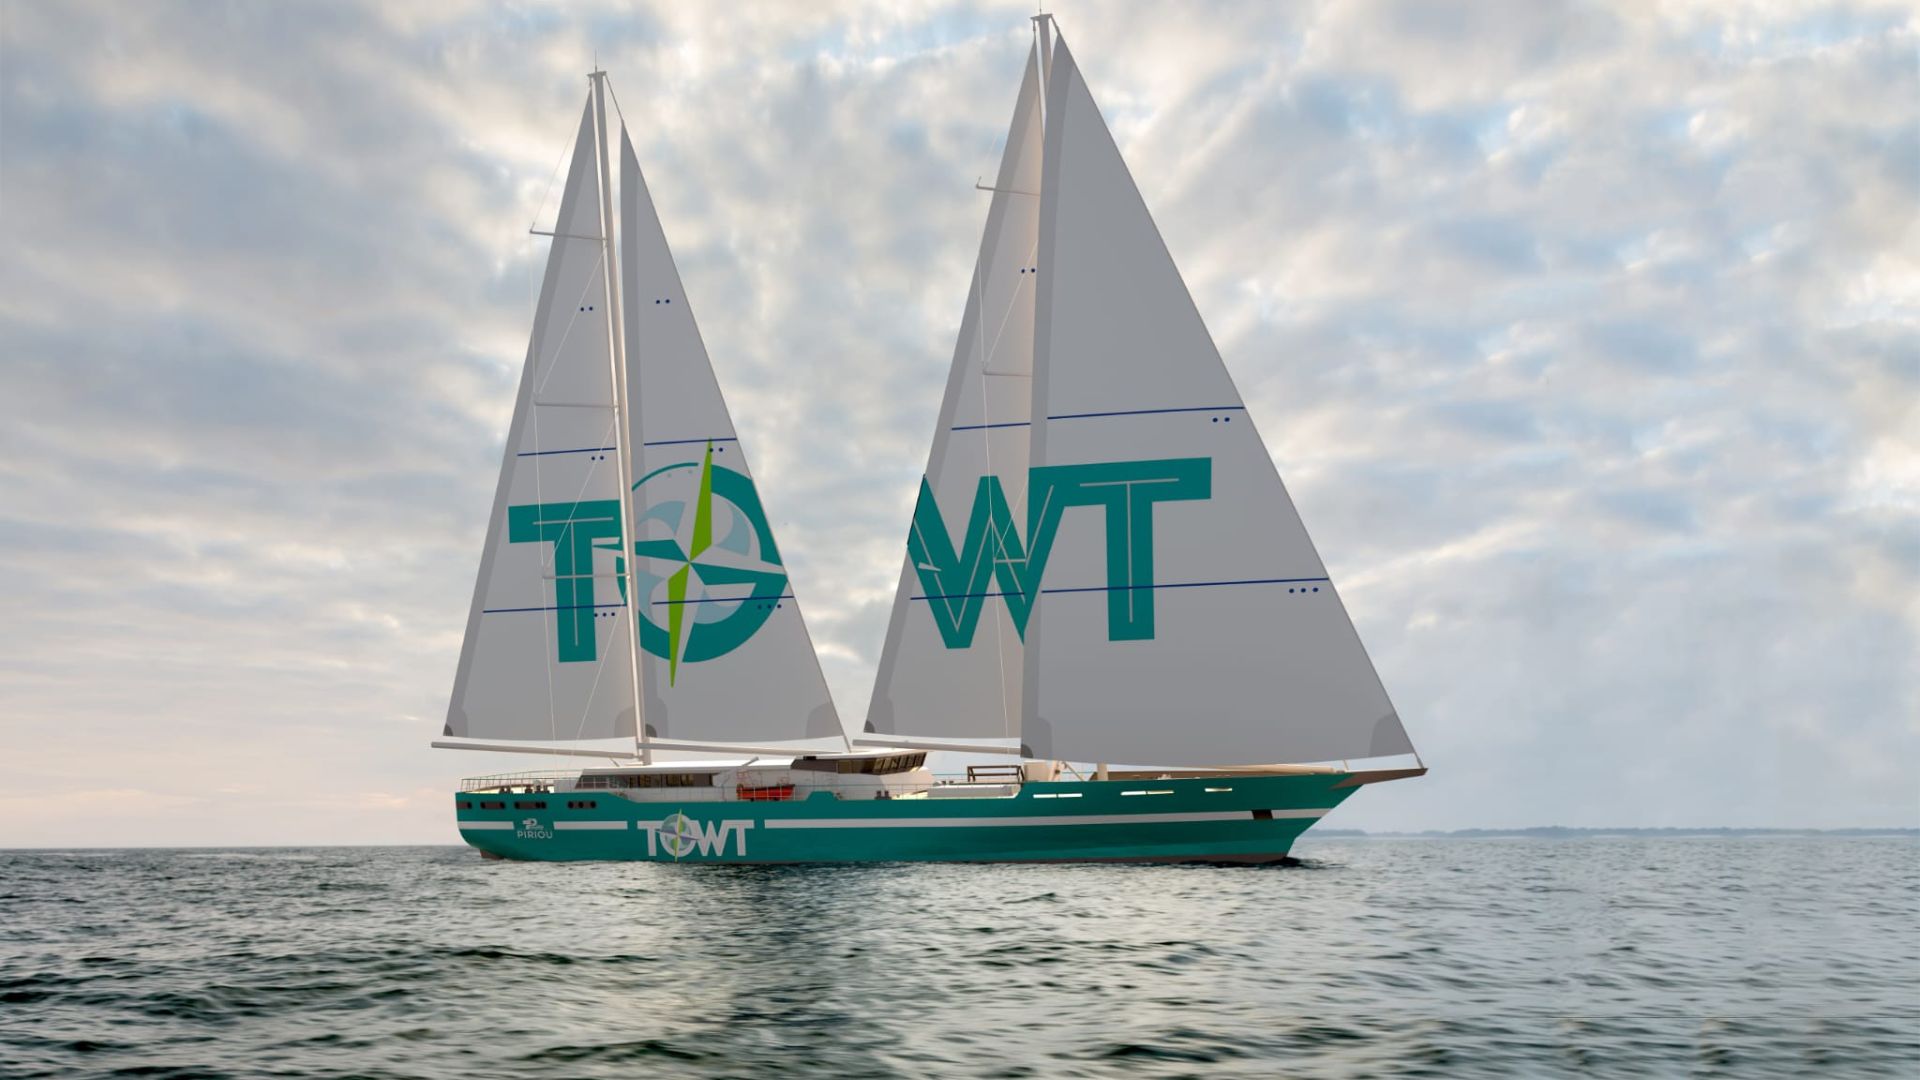 Towt transport maritime voilier